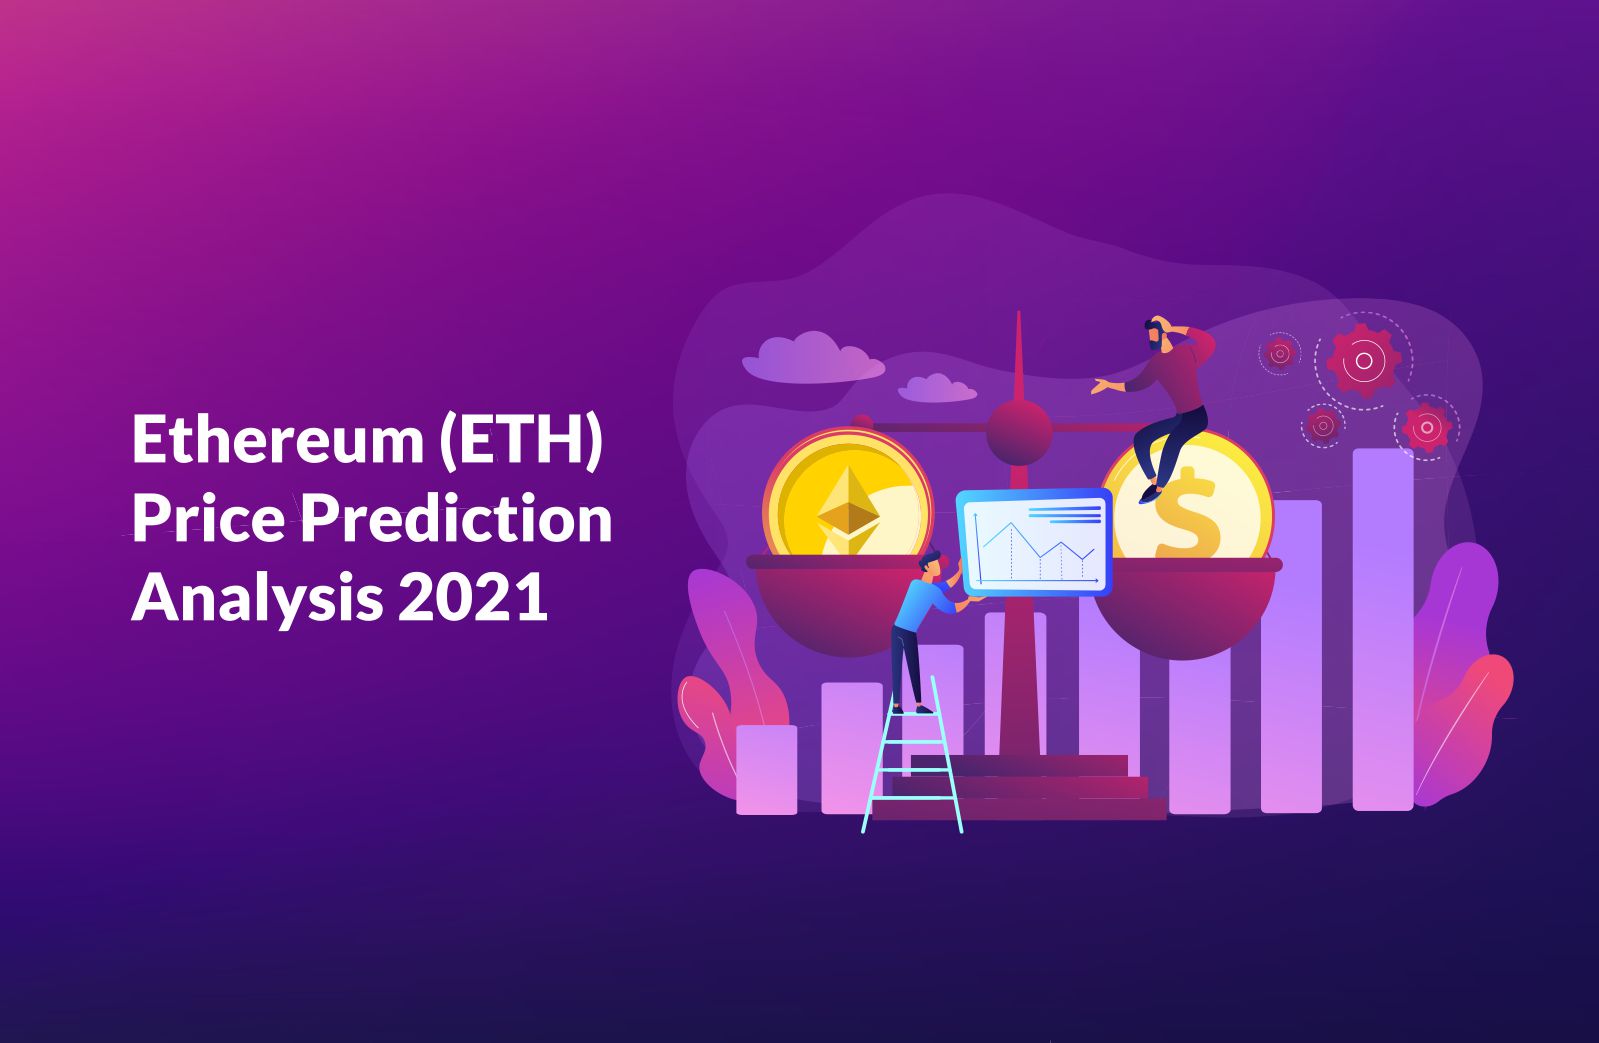 ETH Price Prediction 2021